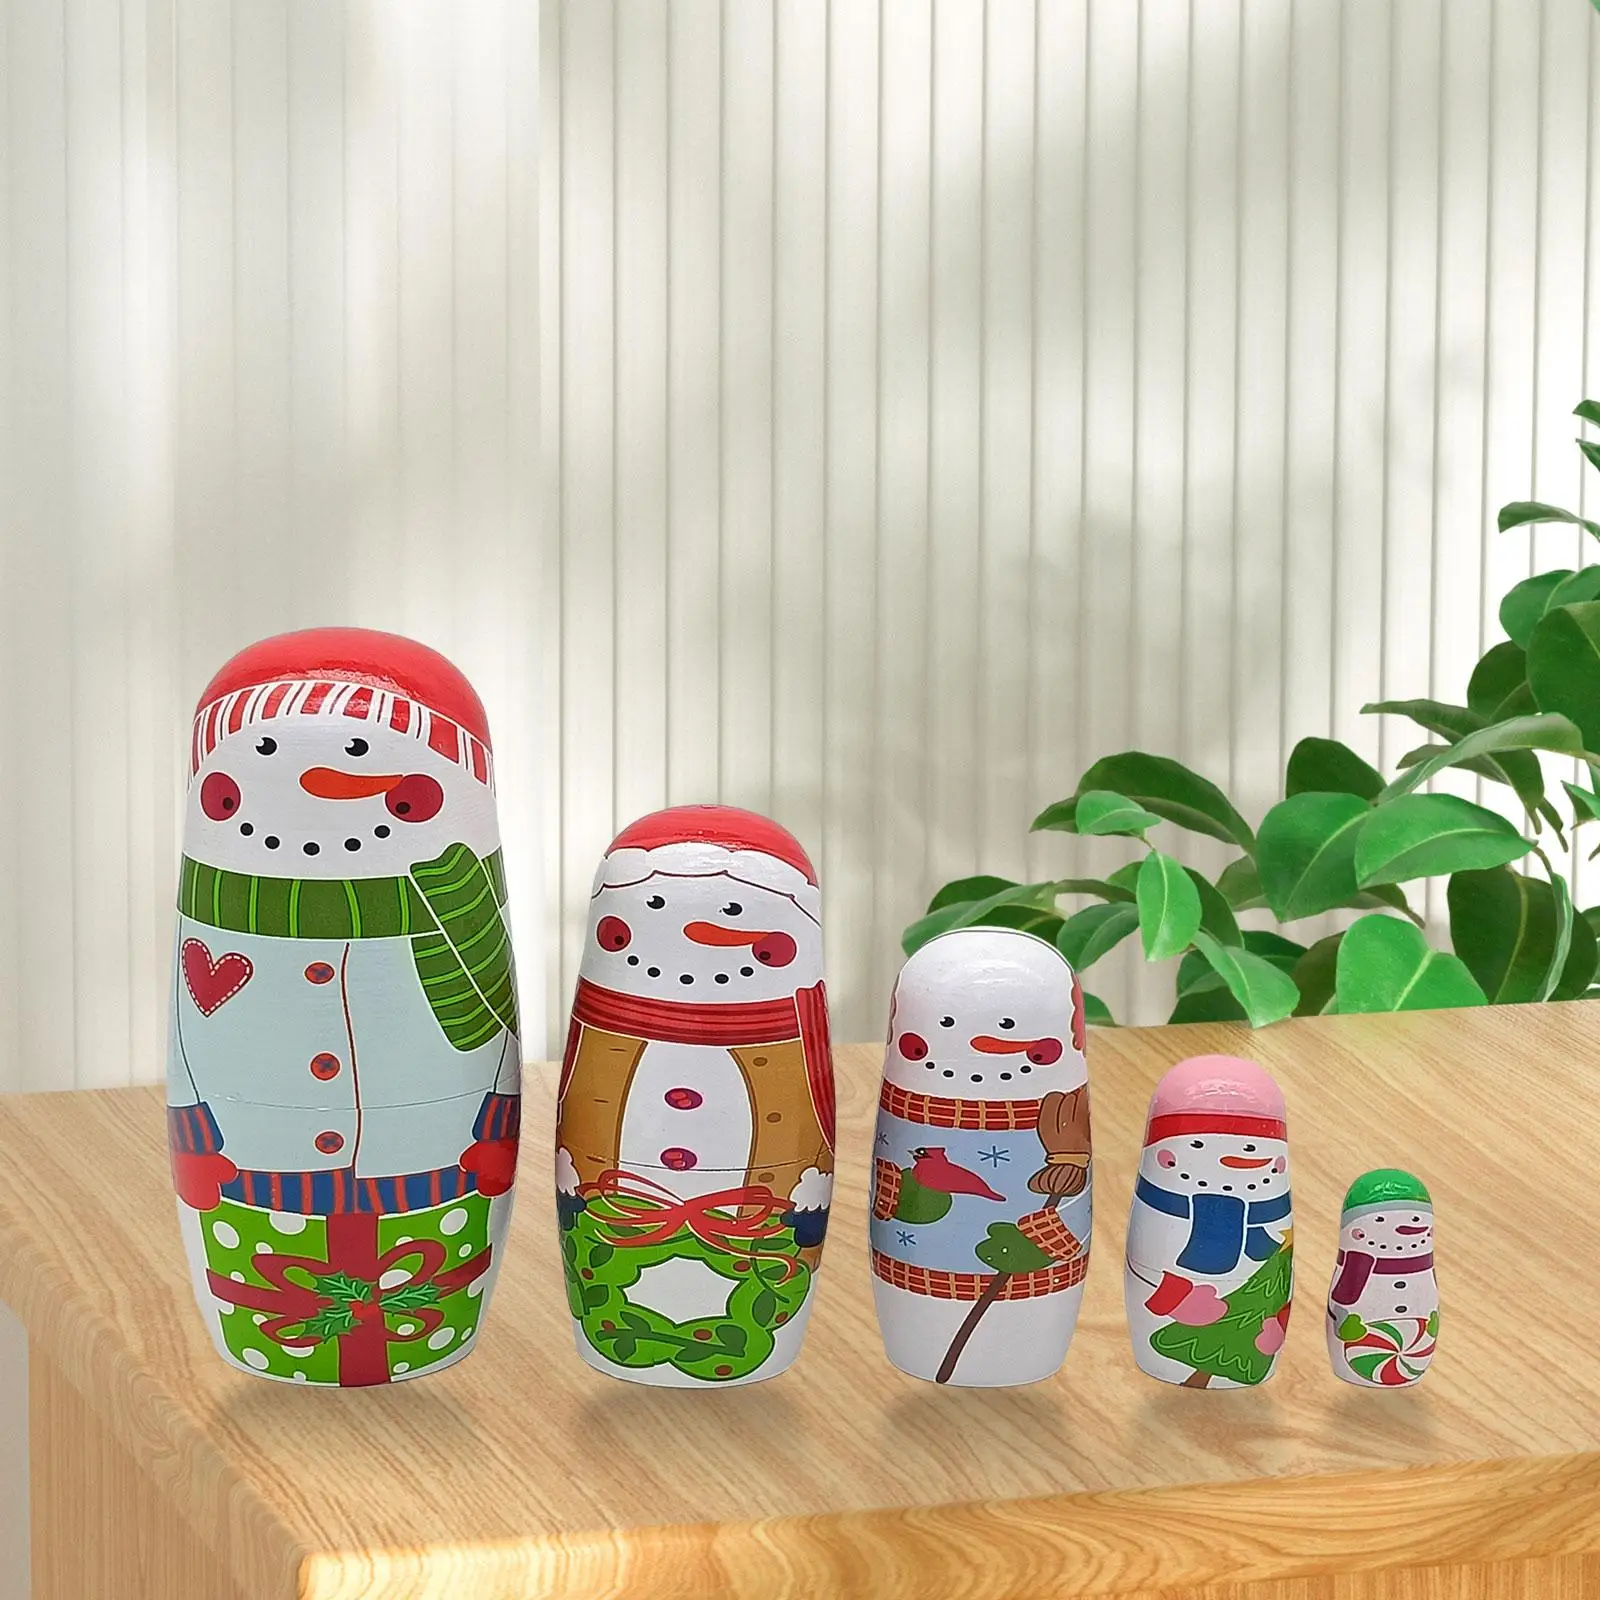 5 Pieces Holiday Santa Snowman Nesting Doll Matryoshka Dolls for Christmas